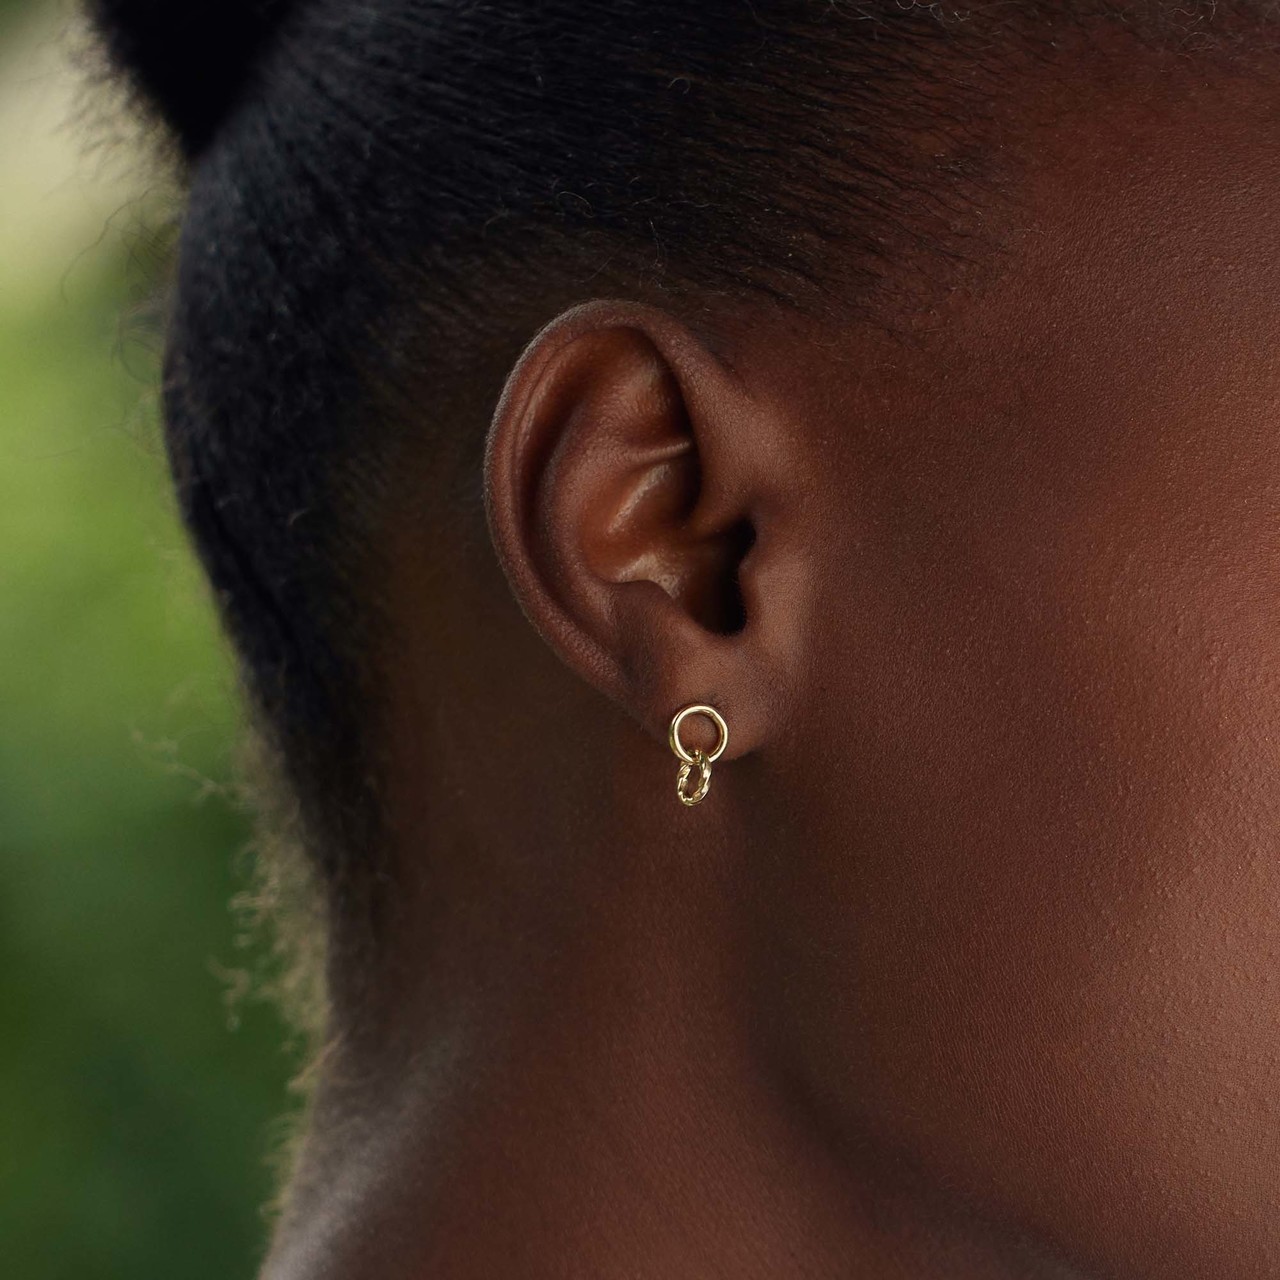 Buy Small Gold Earrings, 14k Gold Dangle Earrings, Unique Gifts for Her,  Dainty Gold Earrings, Small Drop Earrings Online in India - Etsy